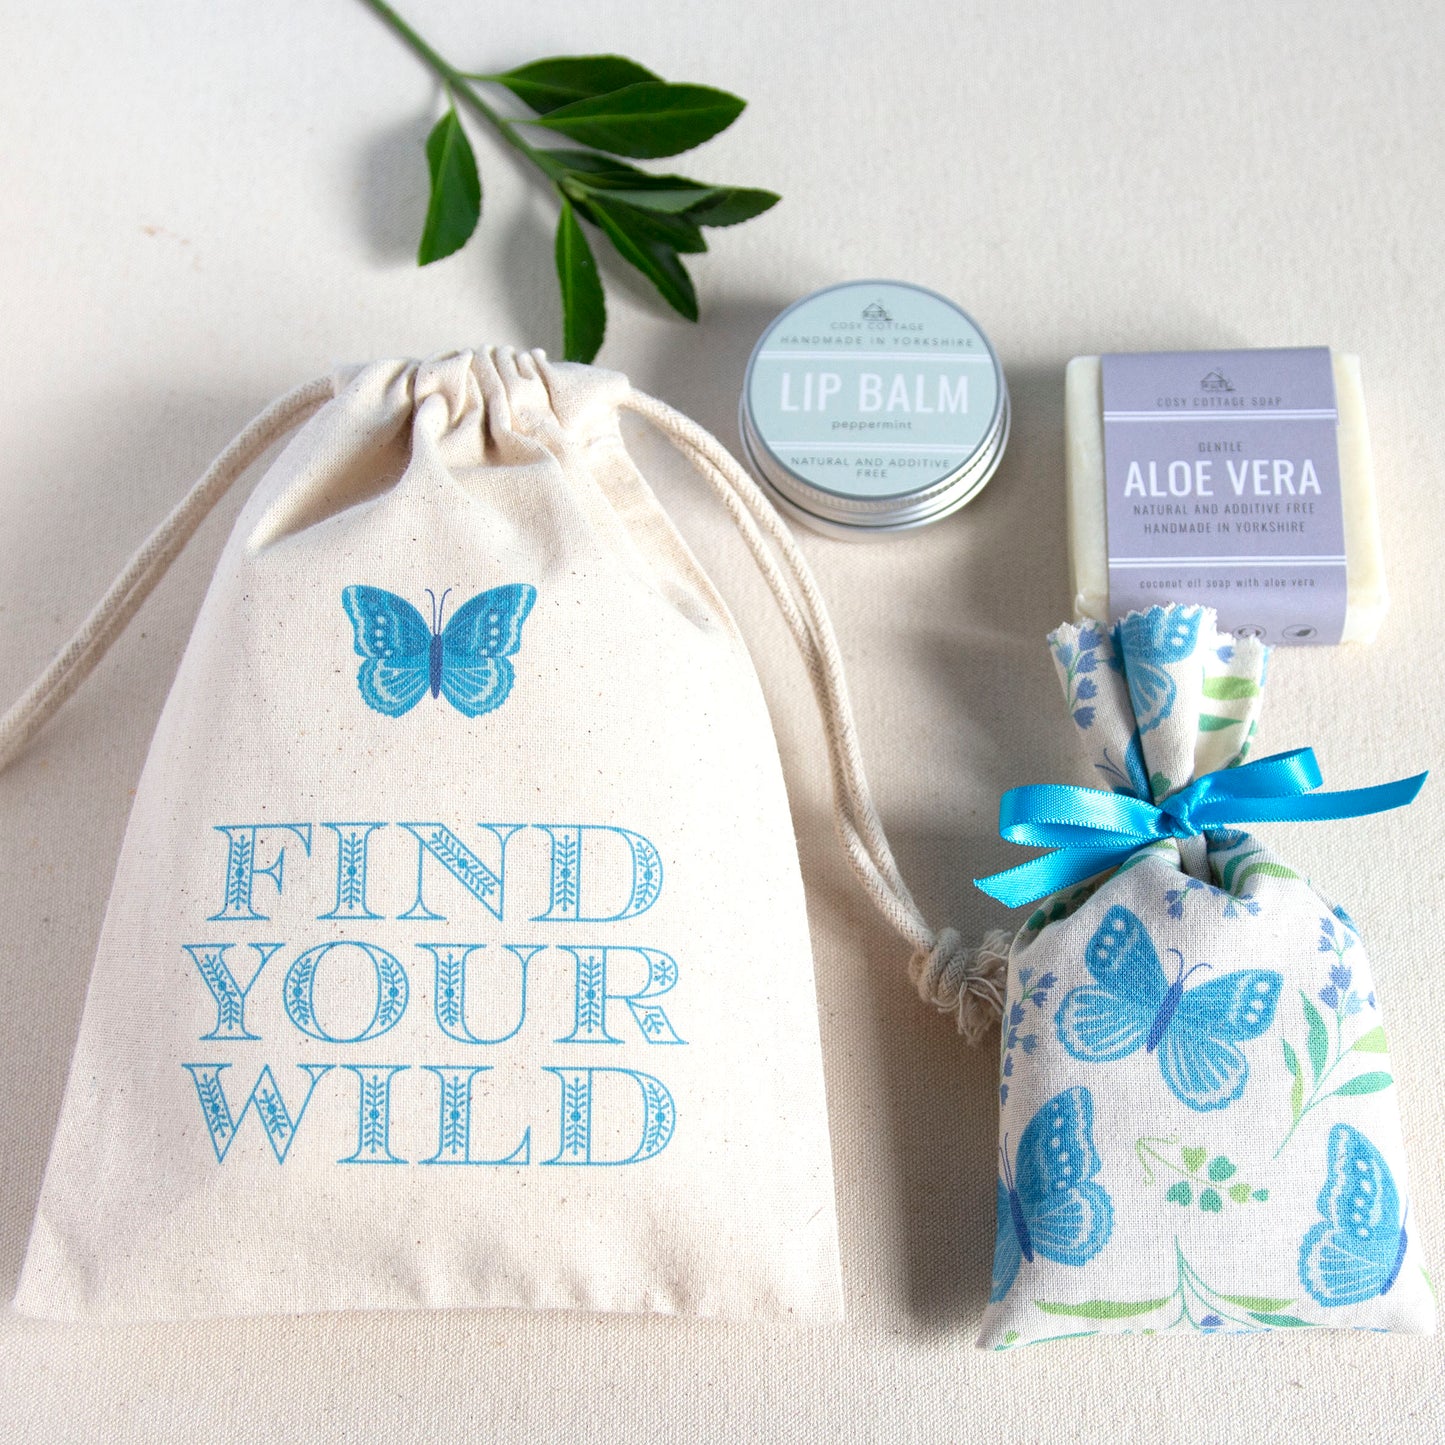 Find Your Wild Organic Bag Set